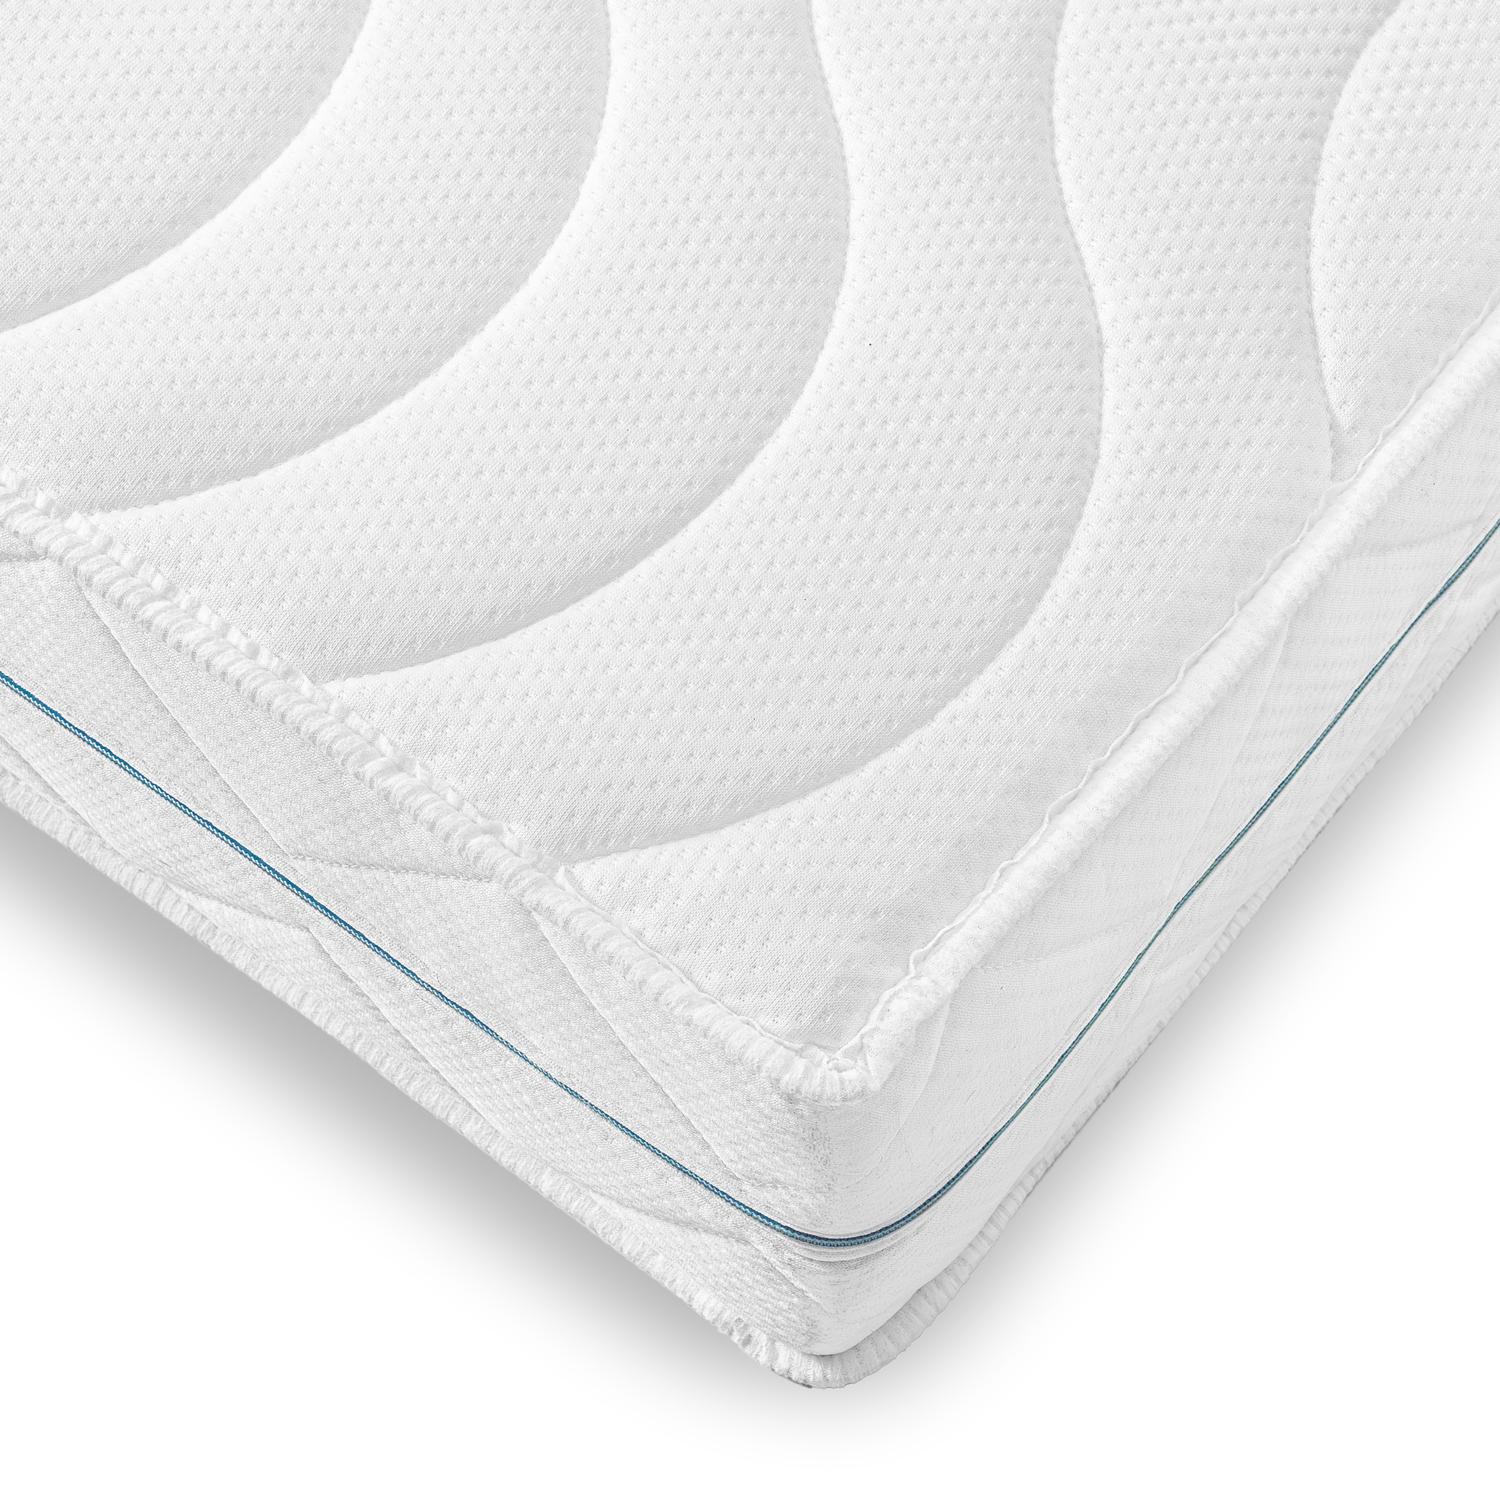 Supportho Premium mattress cover 90 x 200 cm, height 18 cm